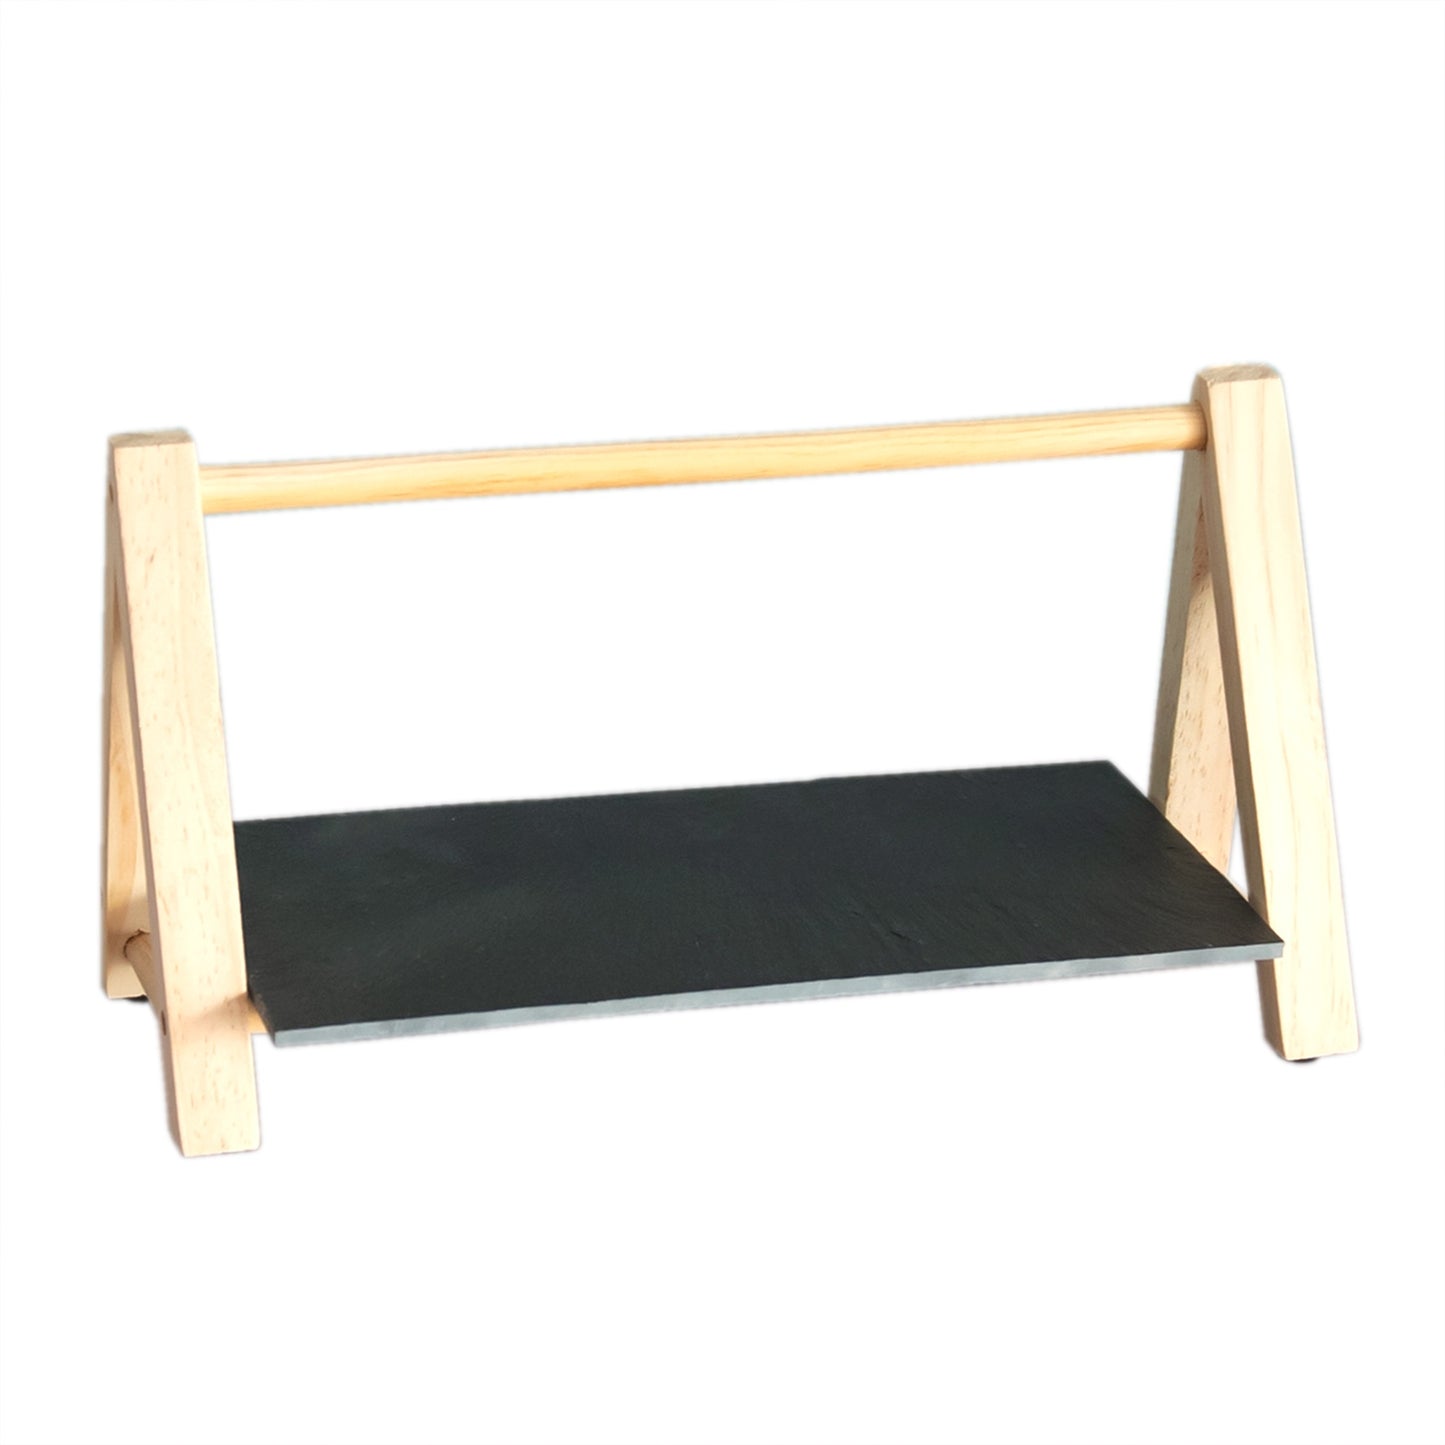 Slate Serving Plate / Platter on Wooden Frame